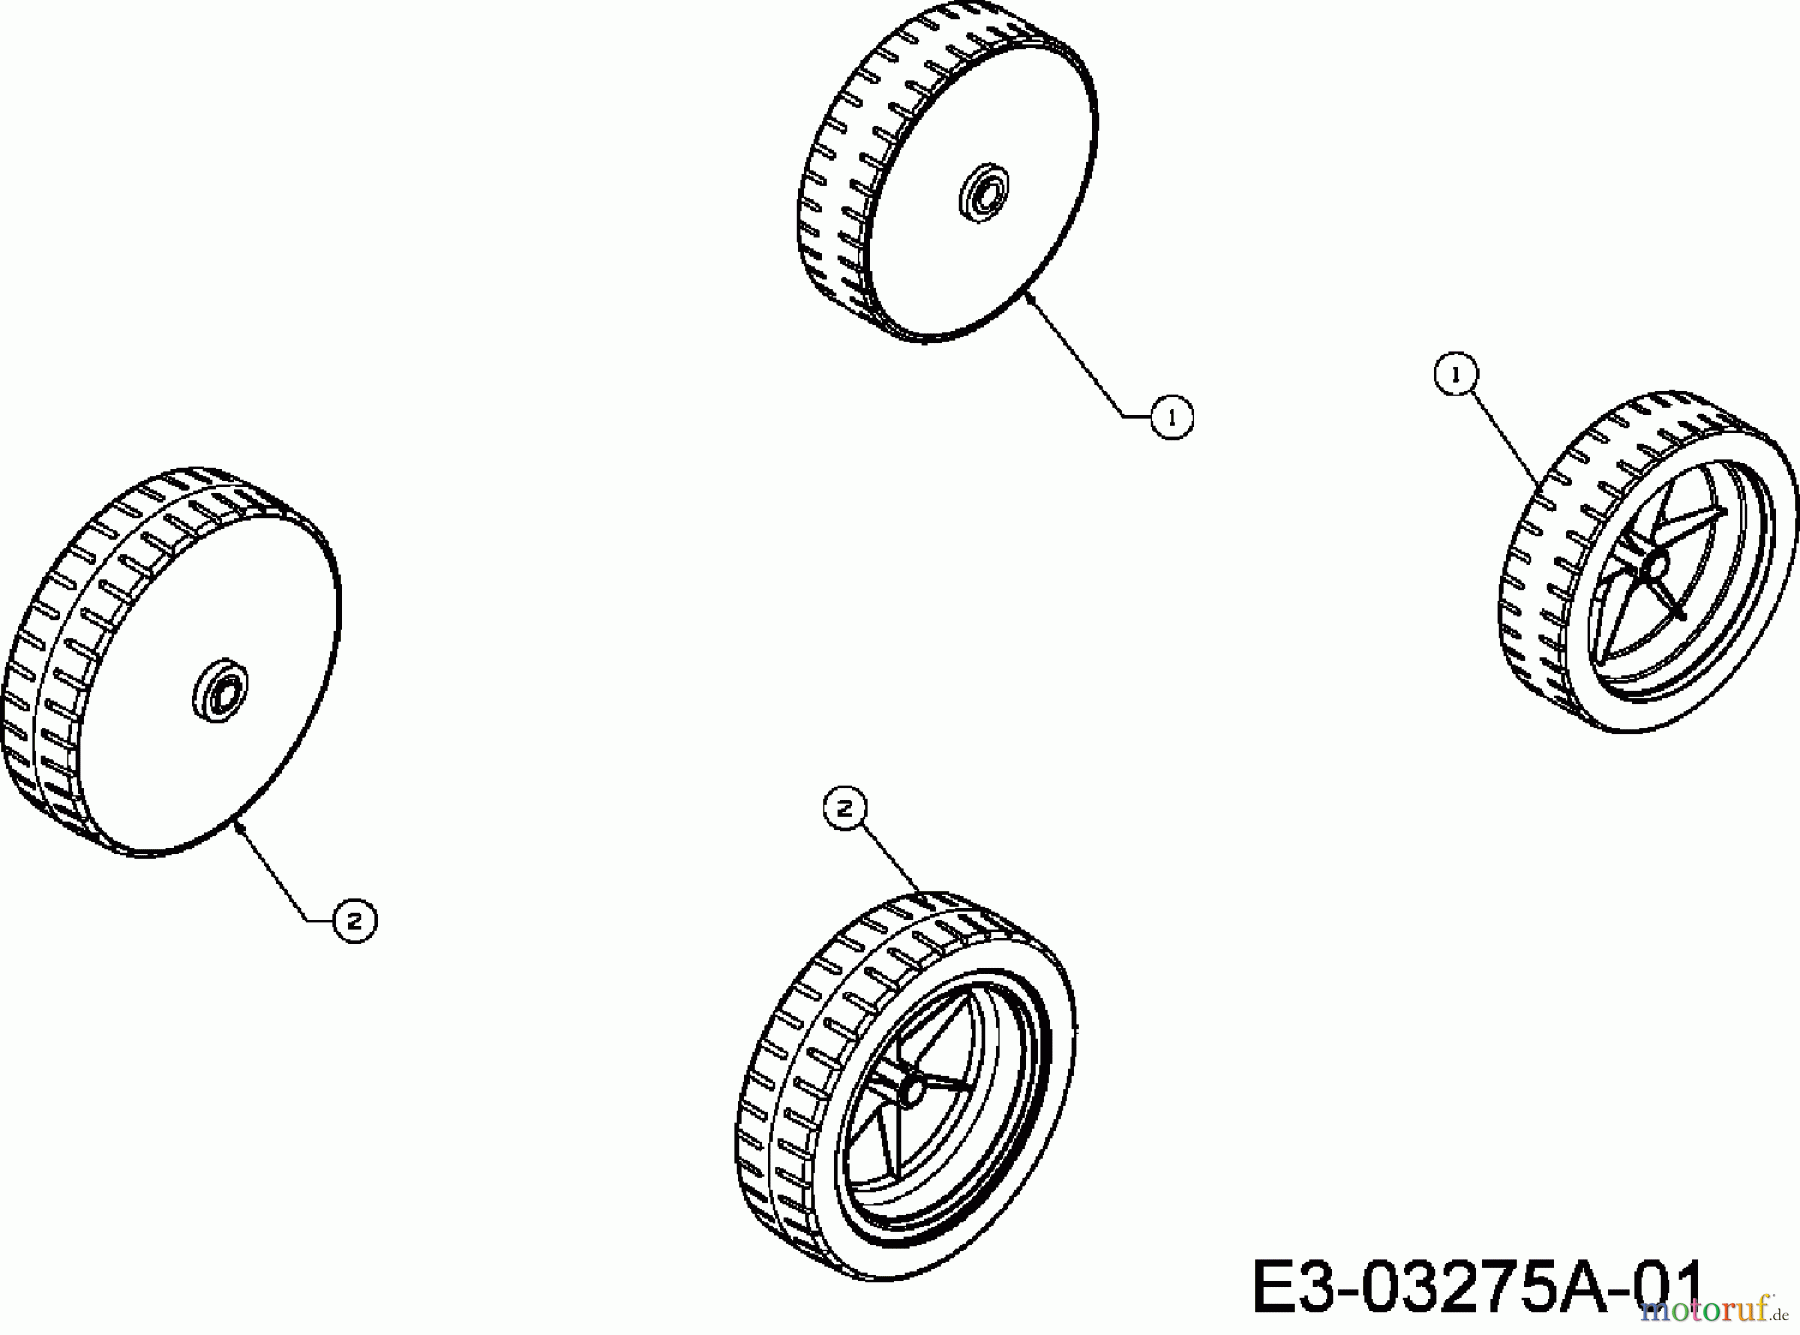  Terradena Elektromäher EM 1400 18C-N4S-651  (2007) Räder